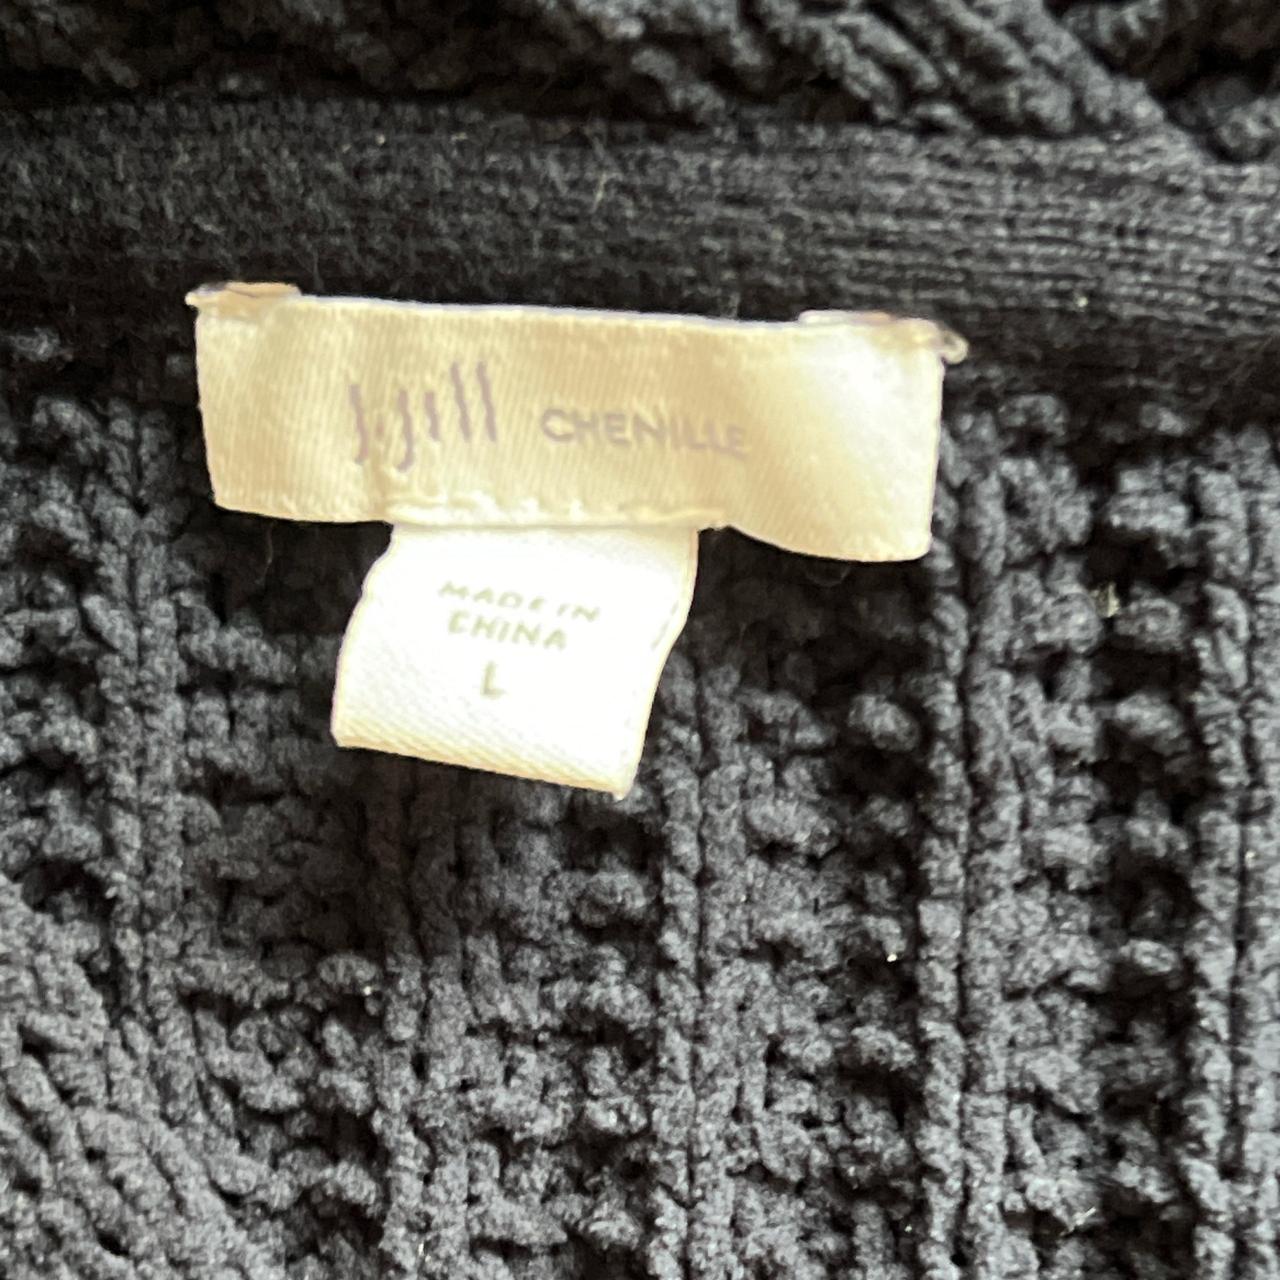 Blue chenille sweater from J.Jill. Labeled size L - Depop